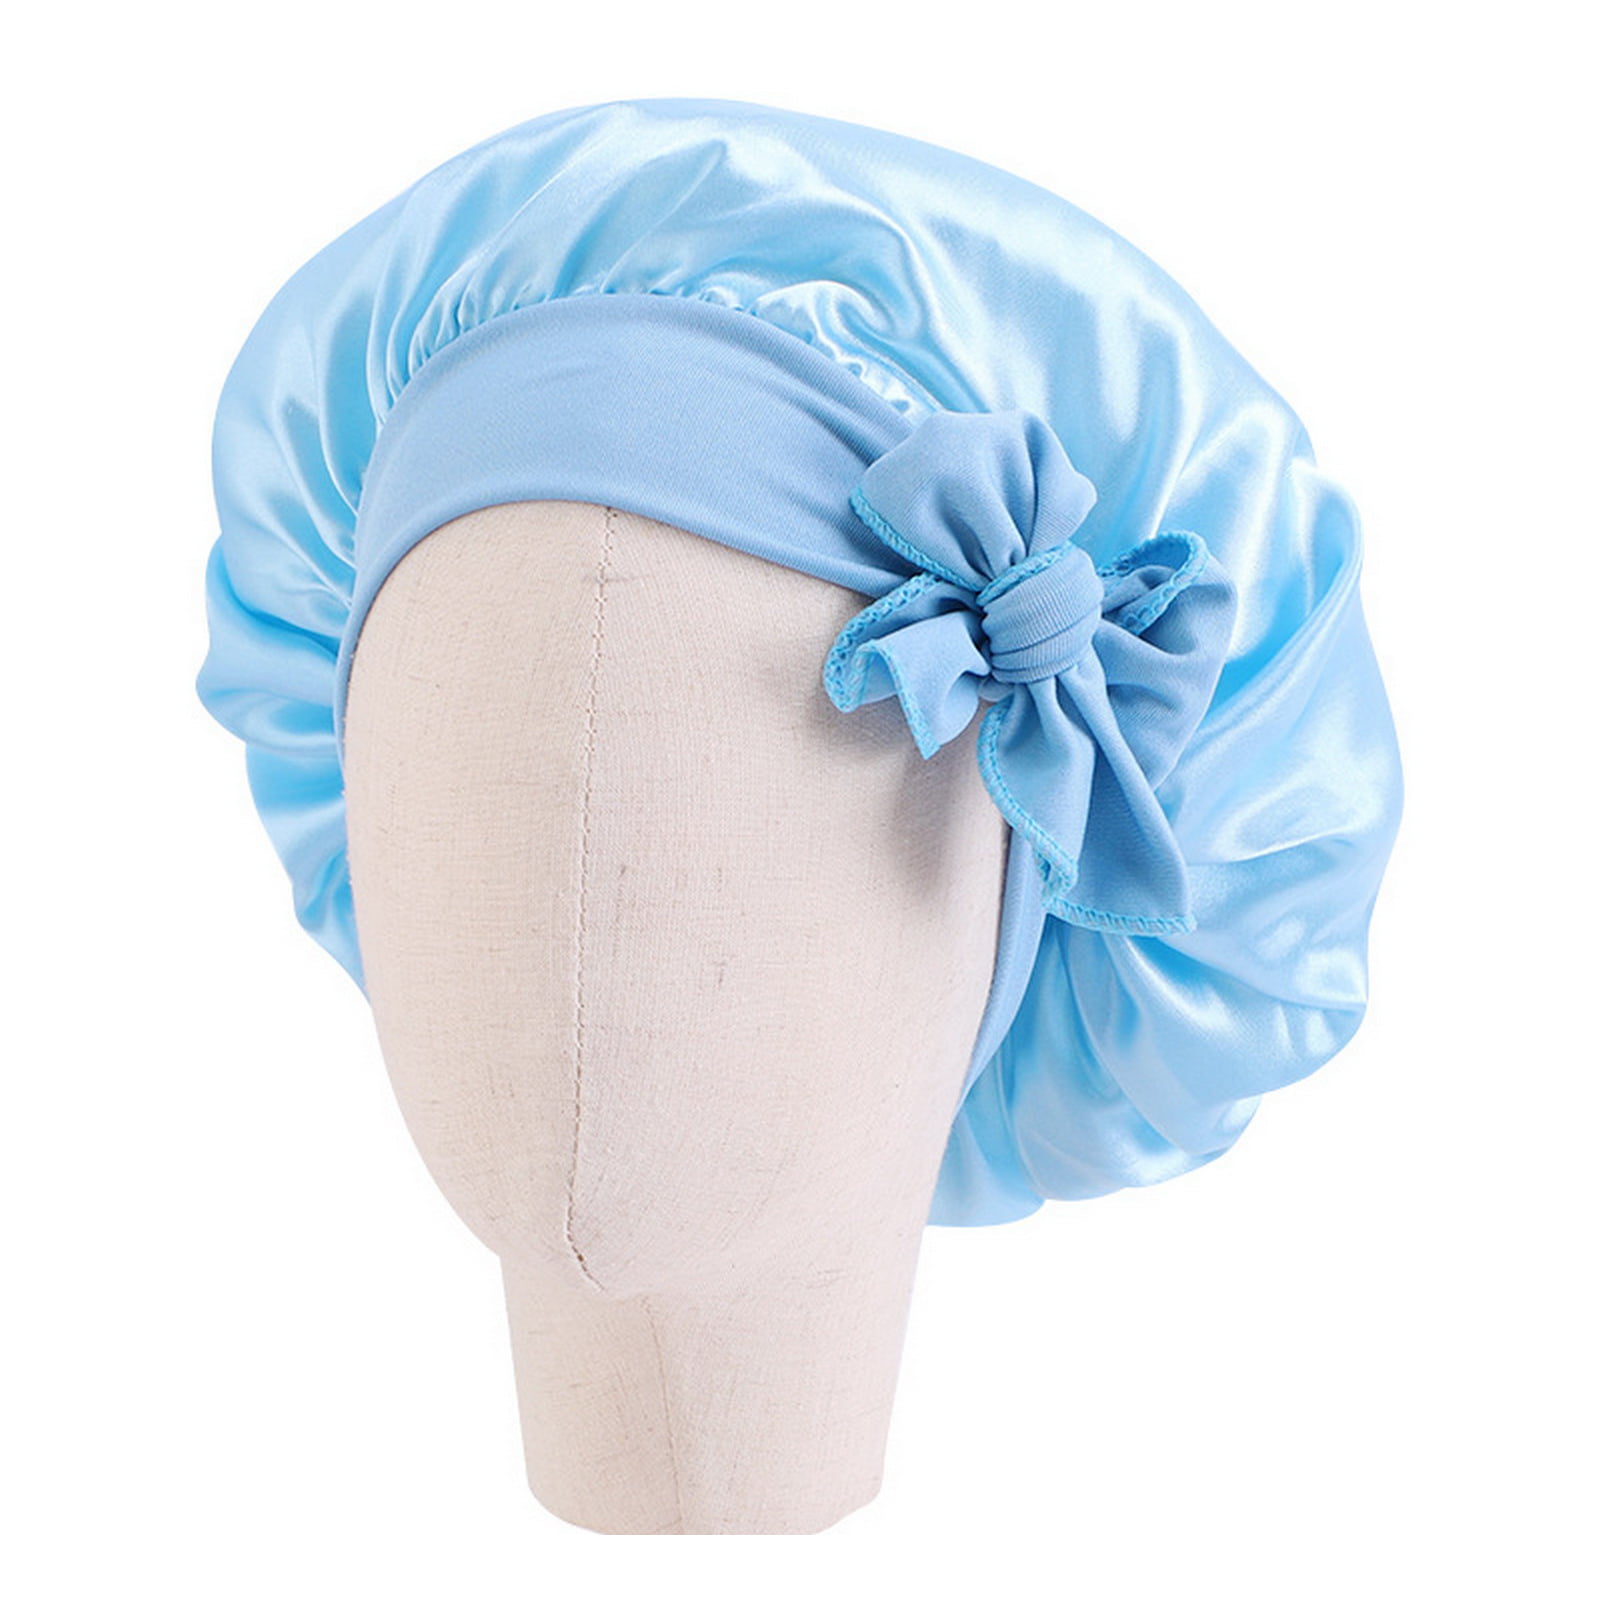 FaLX Soft Comfortable Children Shower Hat - Breathable Strap Design ...